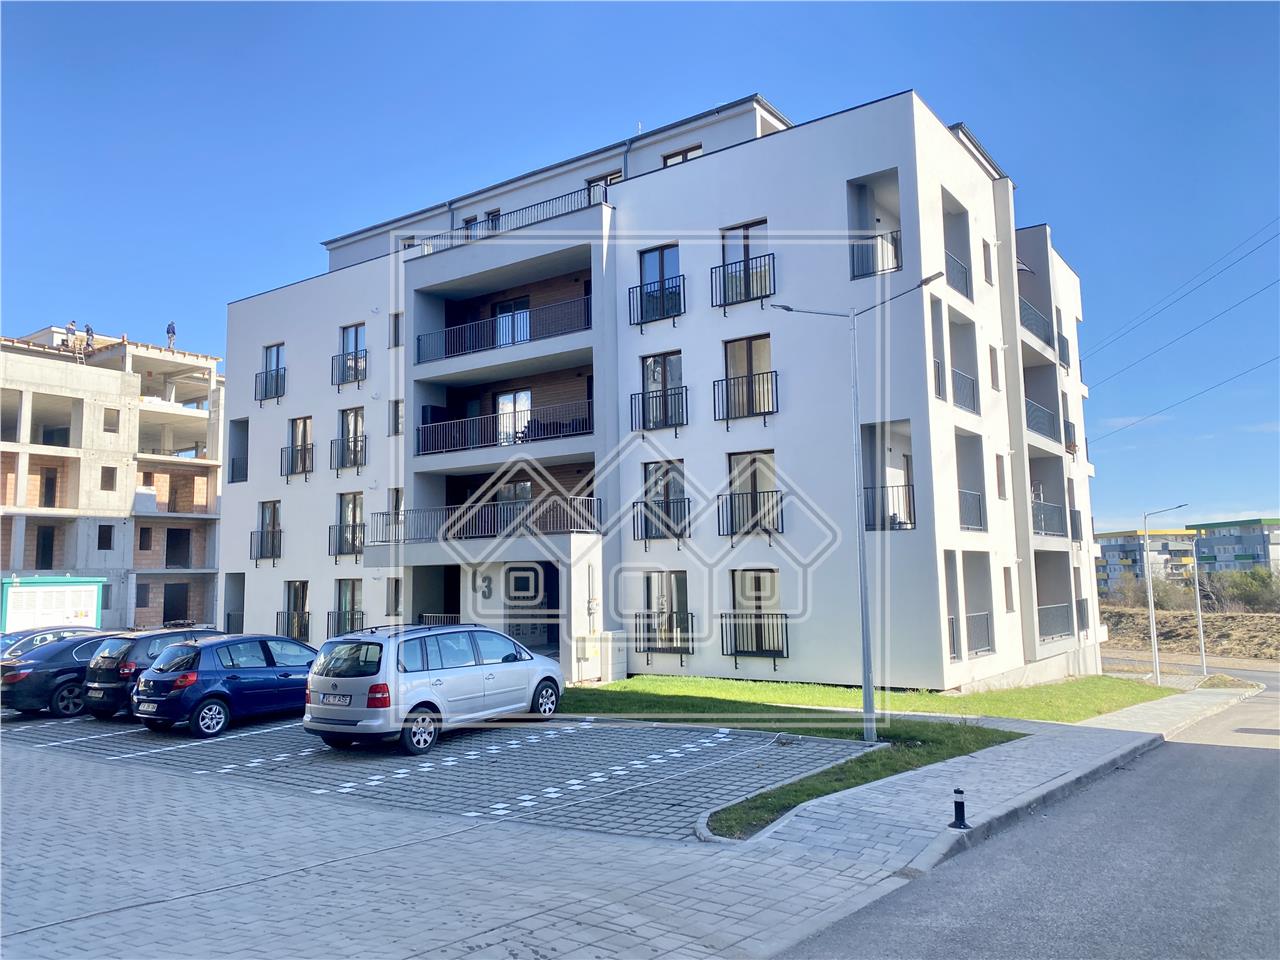 Apartment for sale in Sibiu - intermediate floor - Neppendorf Residenc